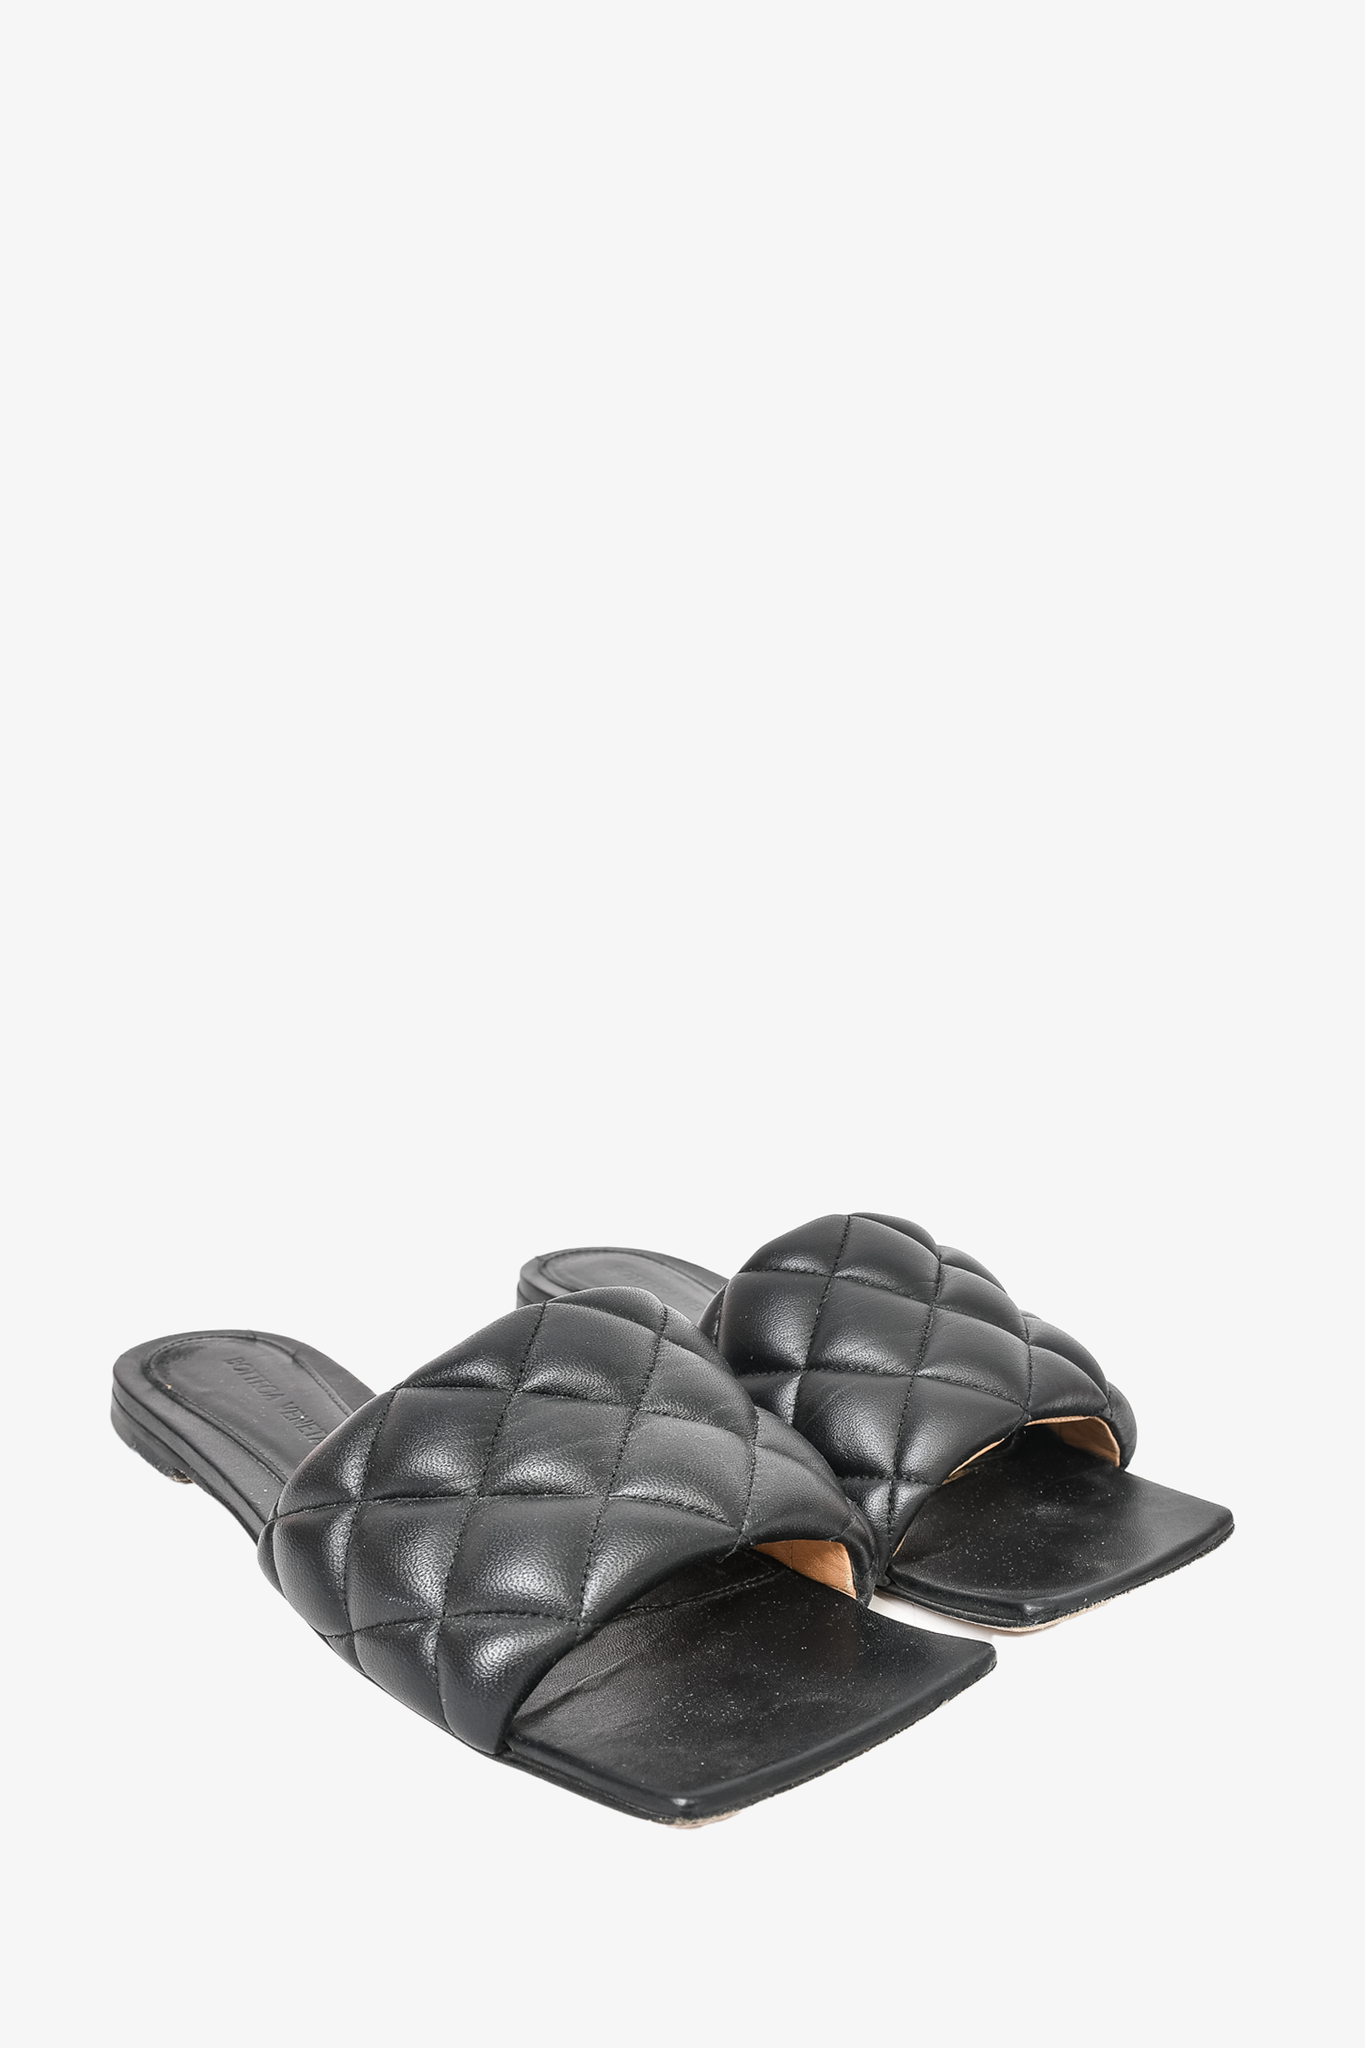 Bottega Veneta Black Intrecciato Leather Slide Sandals Size 36.5